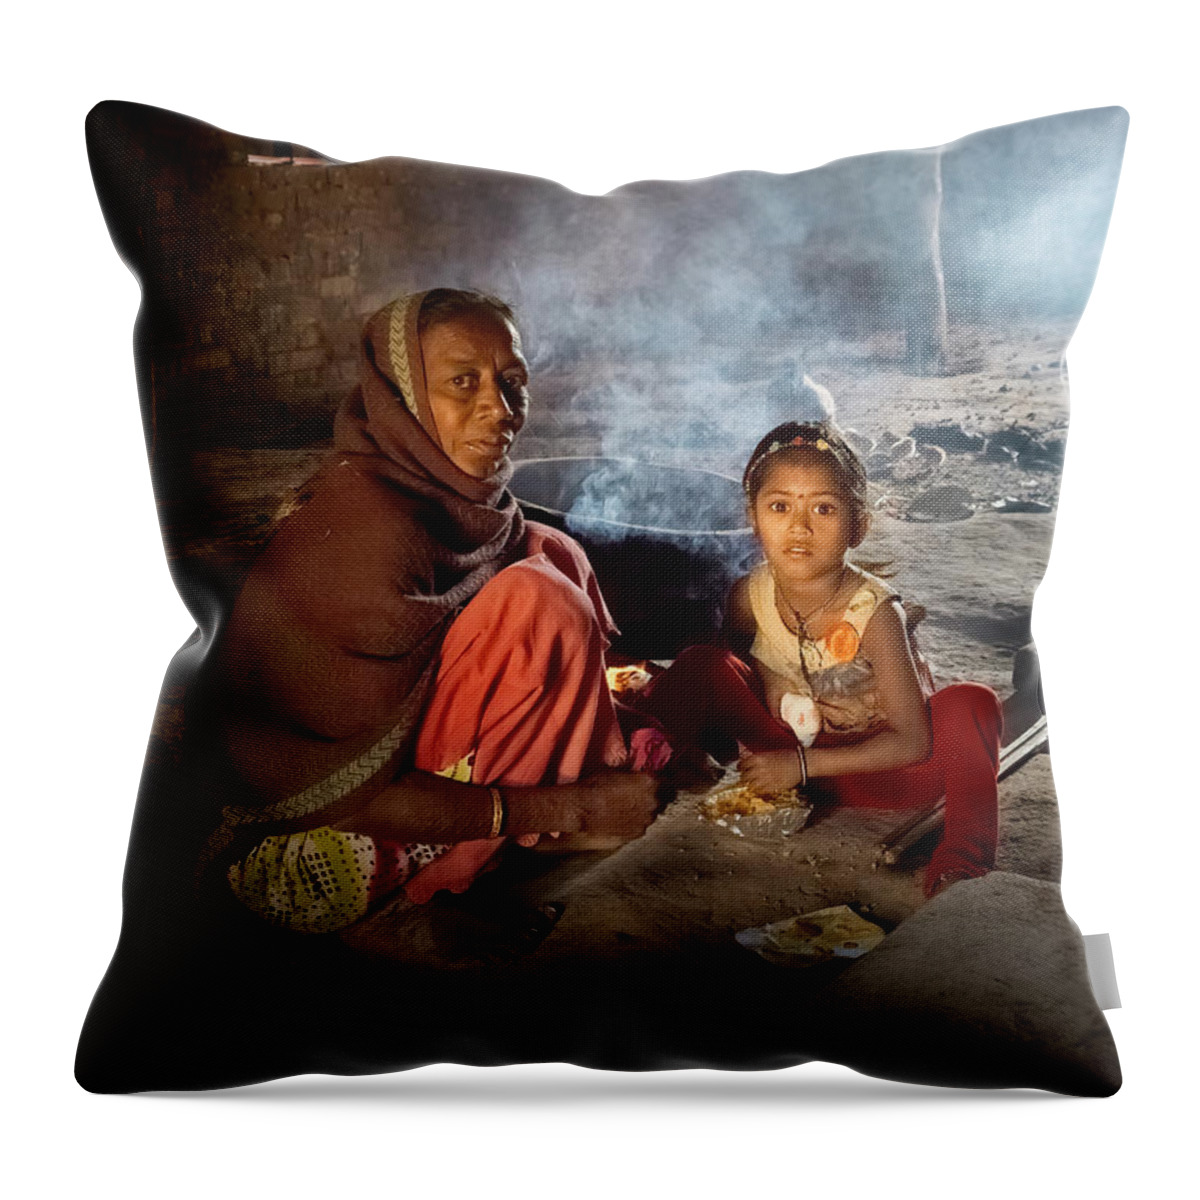 Grandma Throw Pillow featuring the photograph Grandma and grand daughter by Usha Peddamatham